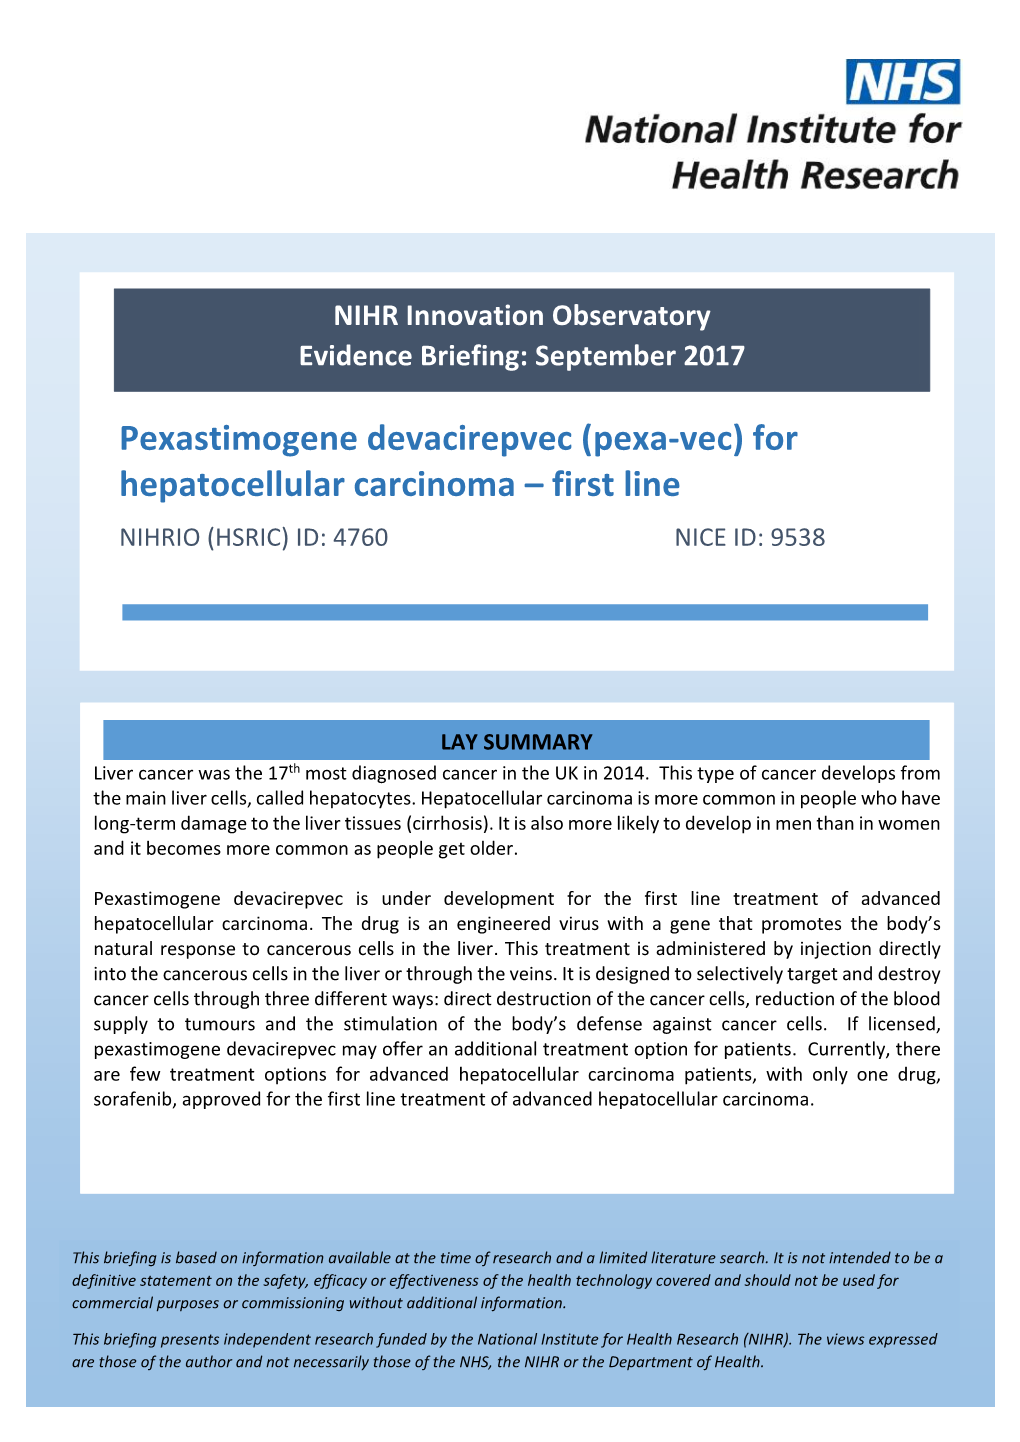 Pexastimogene Devacirepvec (Pexa-Vec) for Hepatocellular Carcinoma – First Line NIHRIO (HSRIC) ID: 4760 NICE ID: 9538